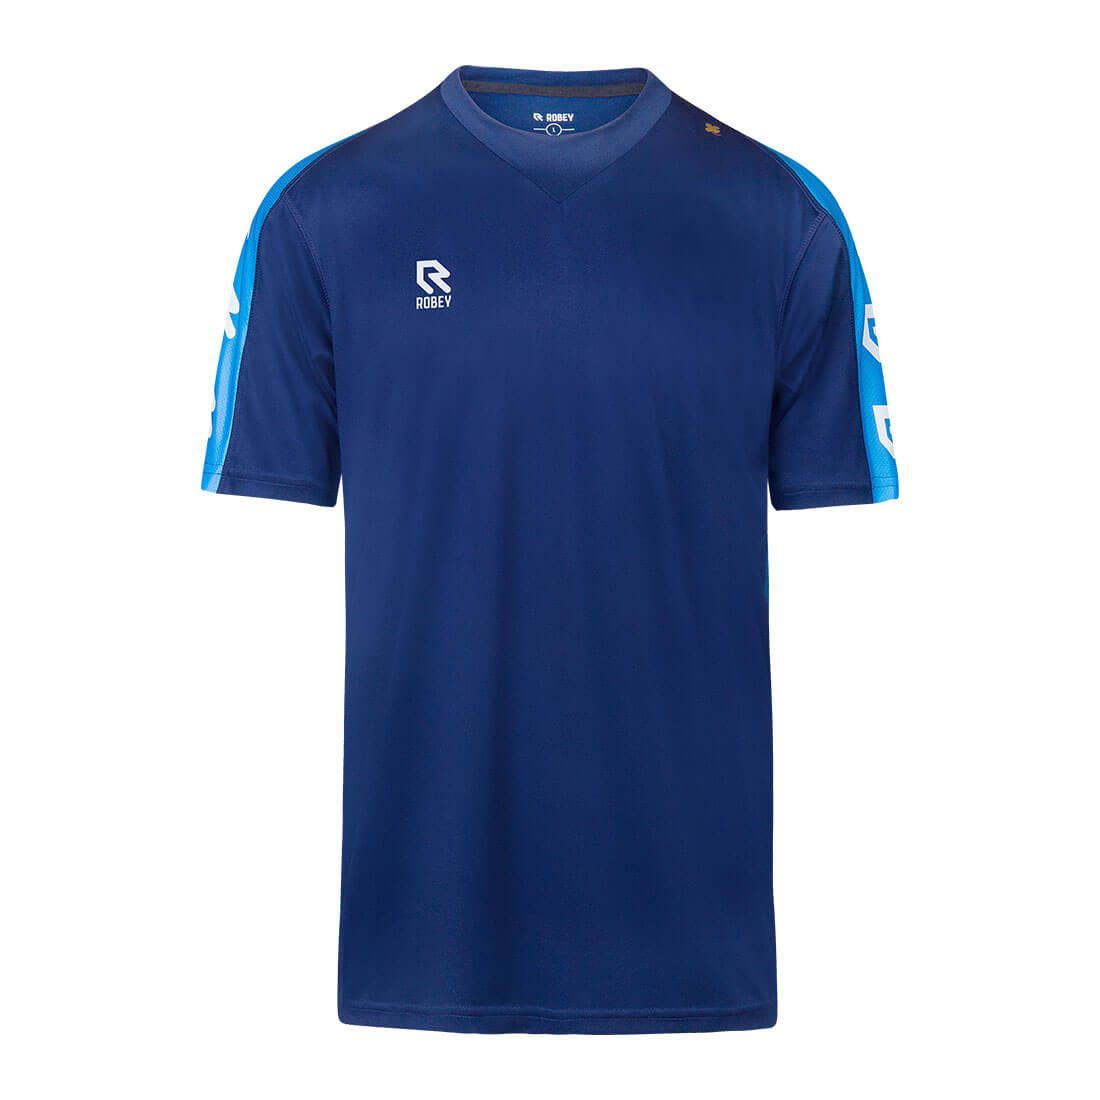 Robey Performance Shirt - Navy Sky Blue